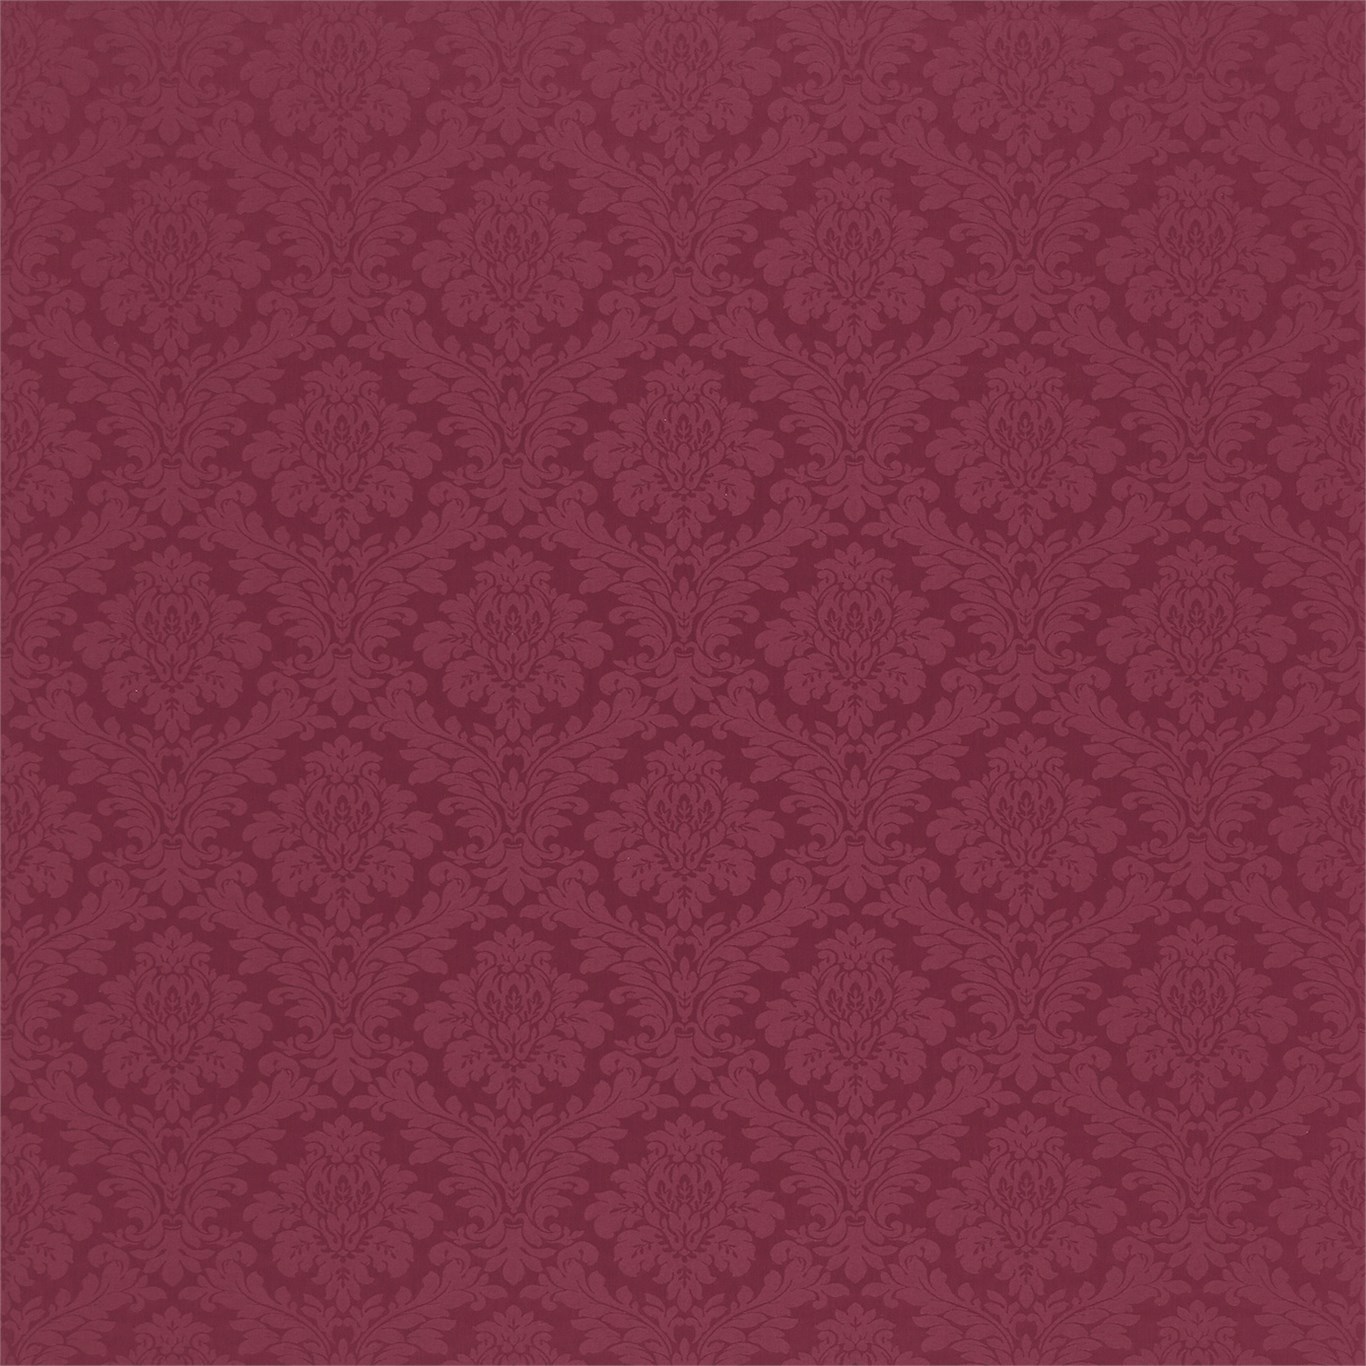 Lymington Damask Redcurrant Fabric by SAN